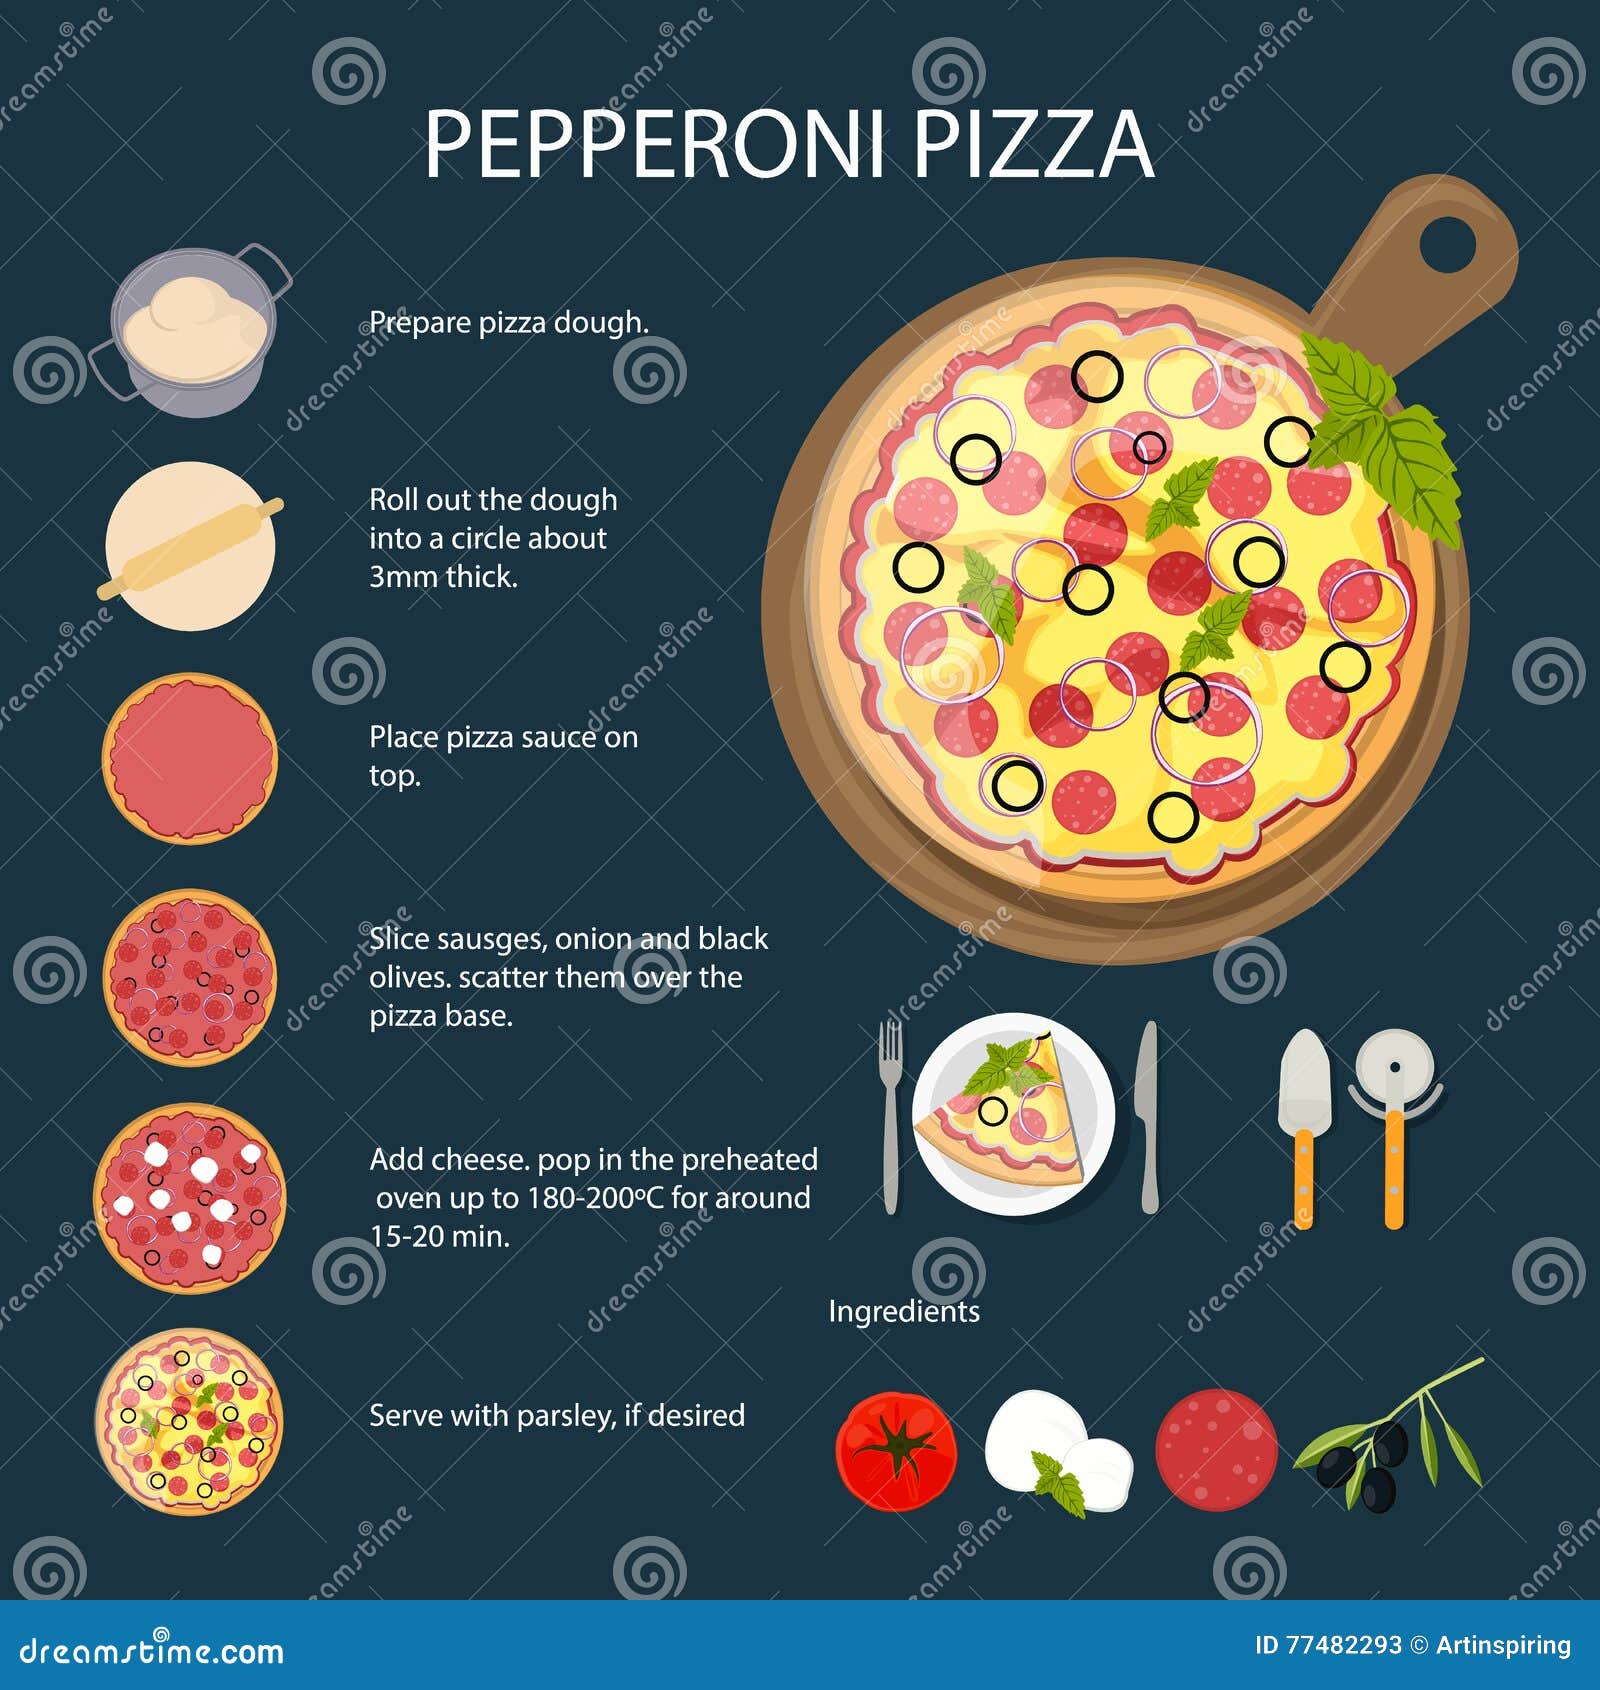 ттк пиццы пепперони (120) фото